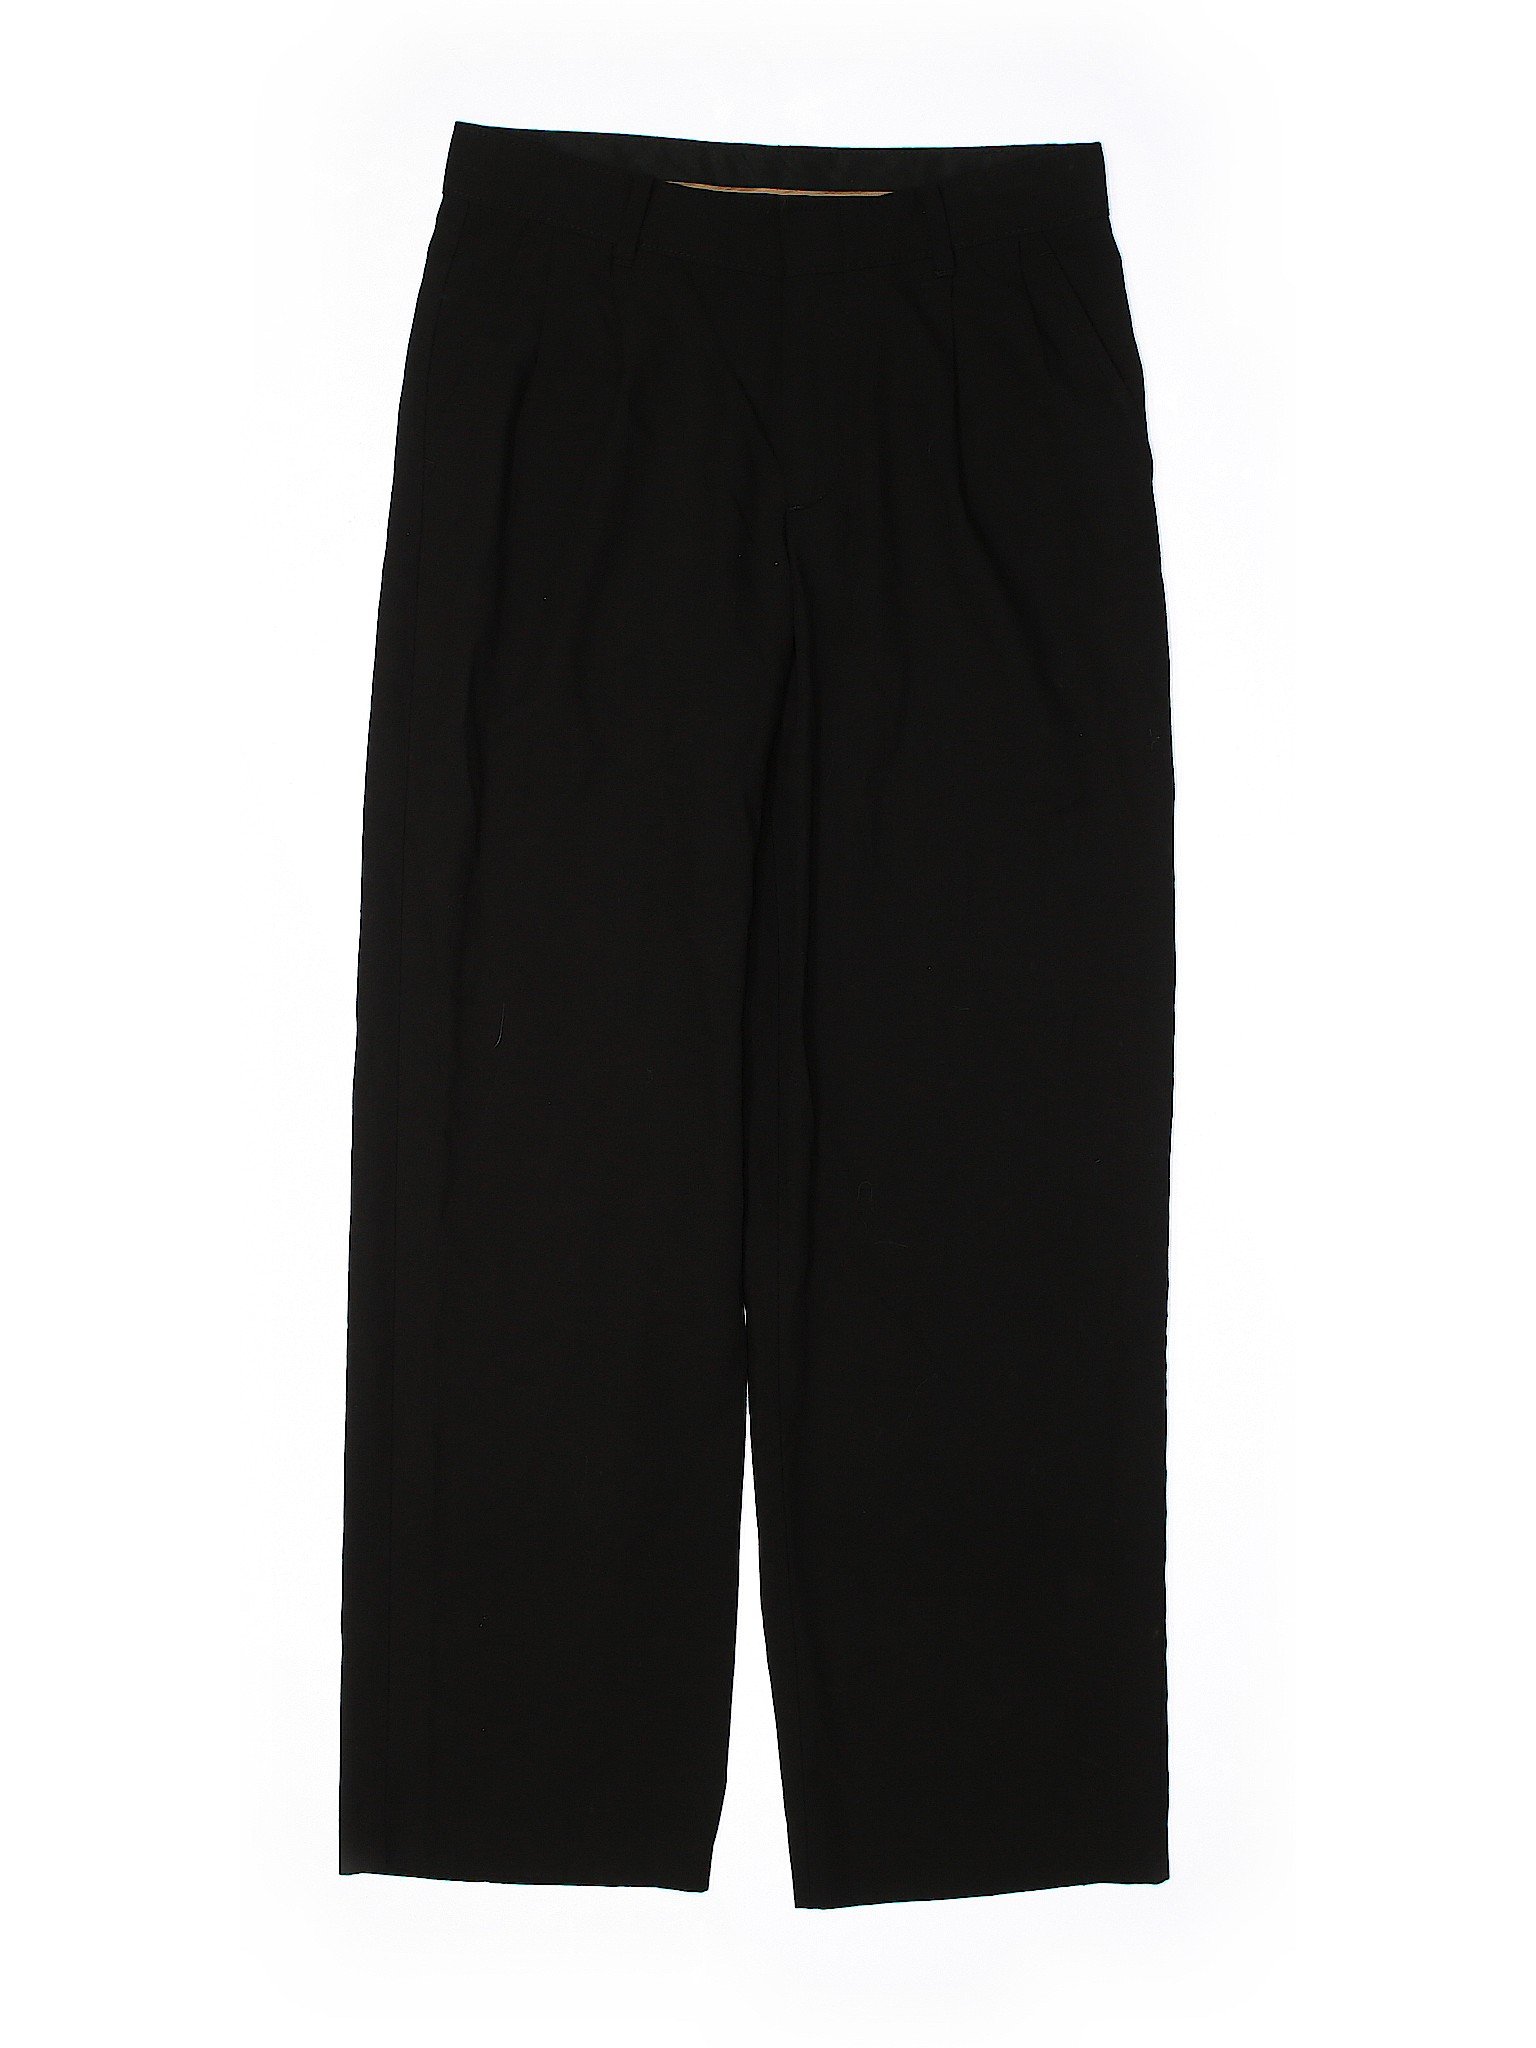 Elite Boys Black Dress Pants 12 | eBay